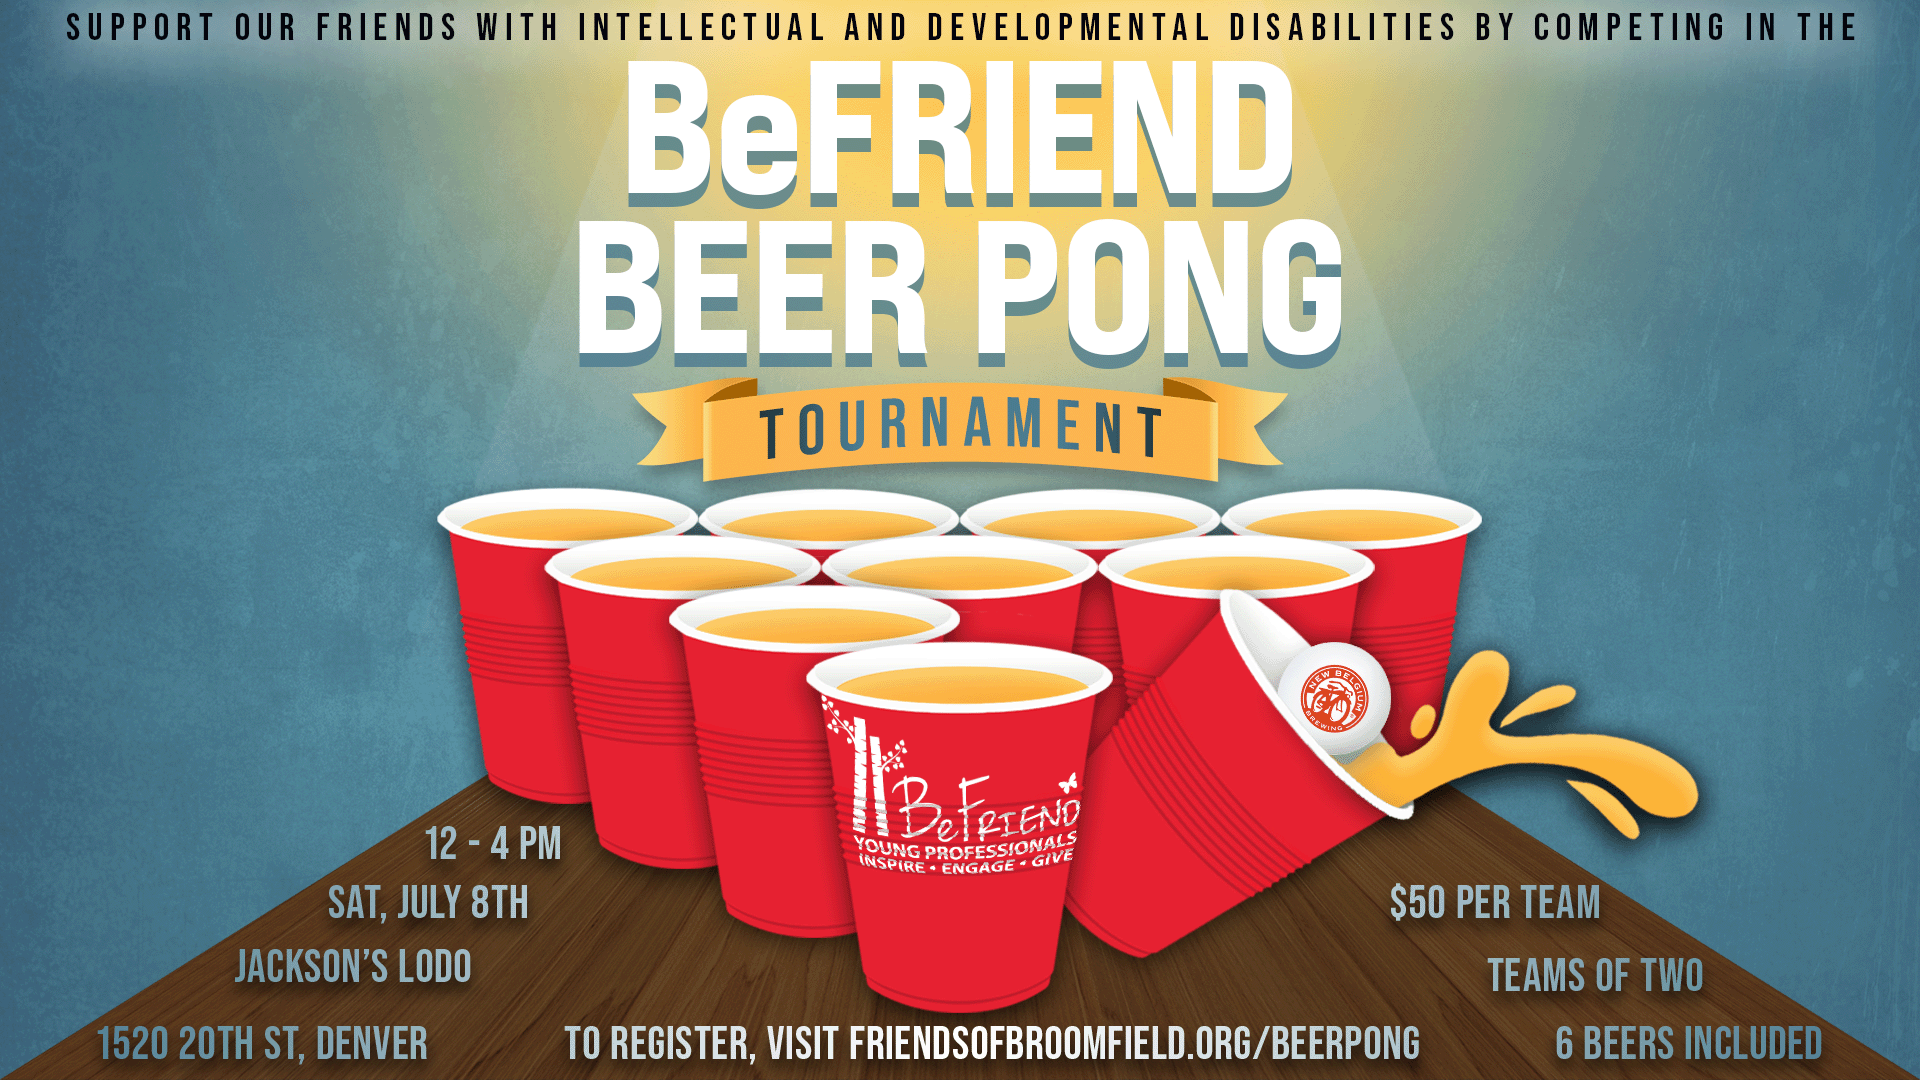 Beer Pong Tournament — FRIENDS